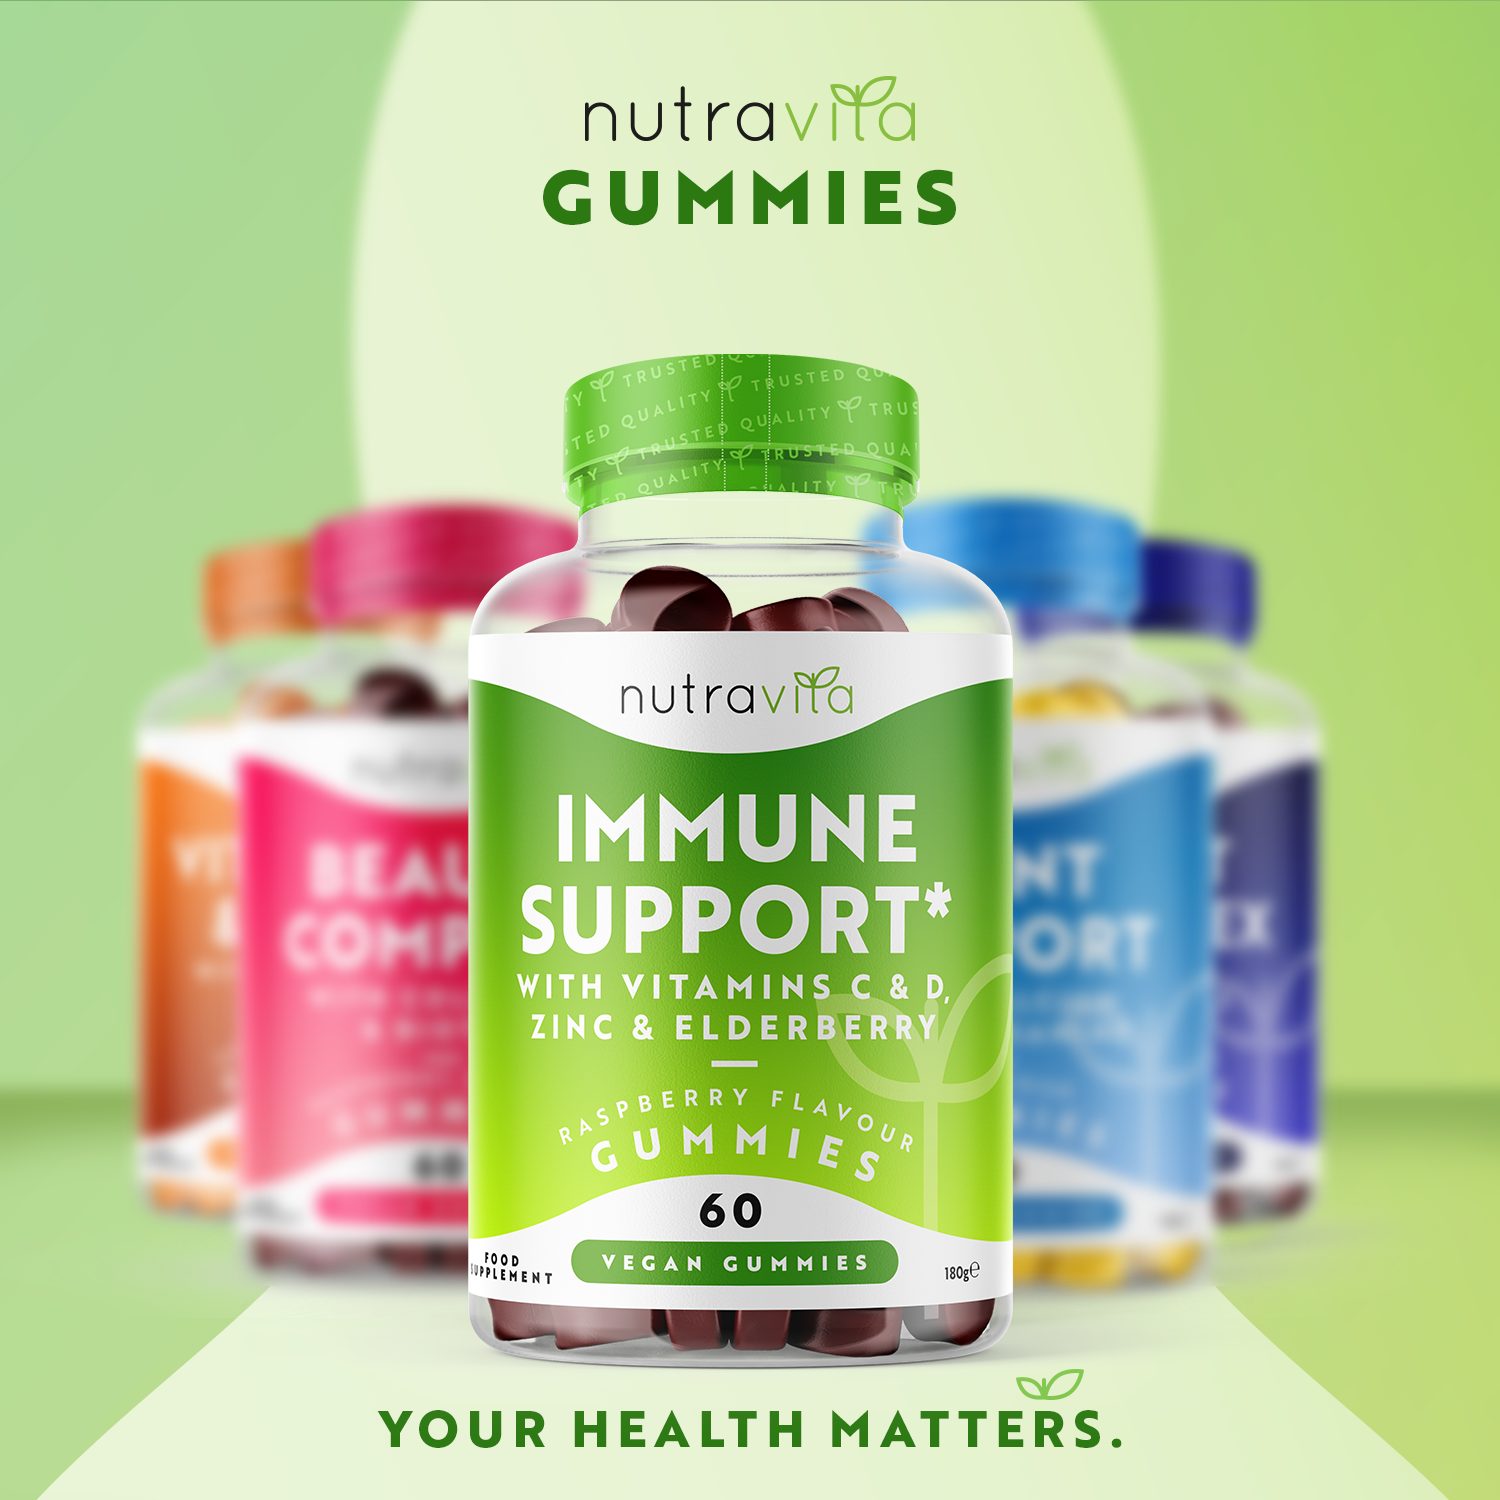 Immune Support Gummies - 60 Vegan Gummies with Vitamin C, D, Zinc & Elderberry